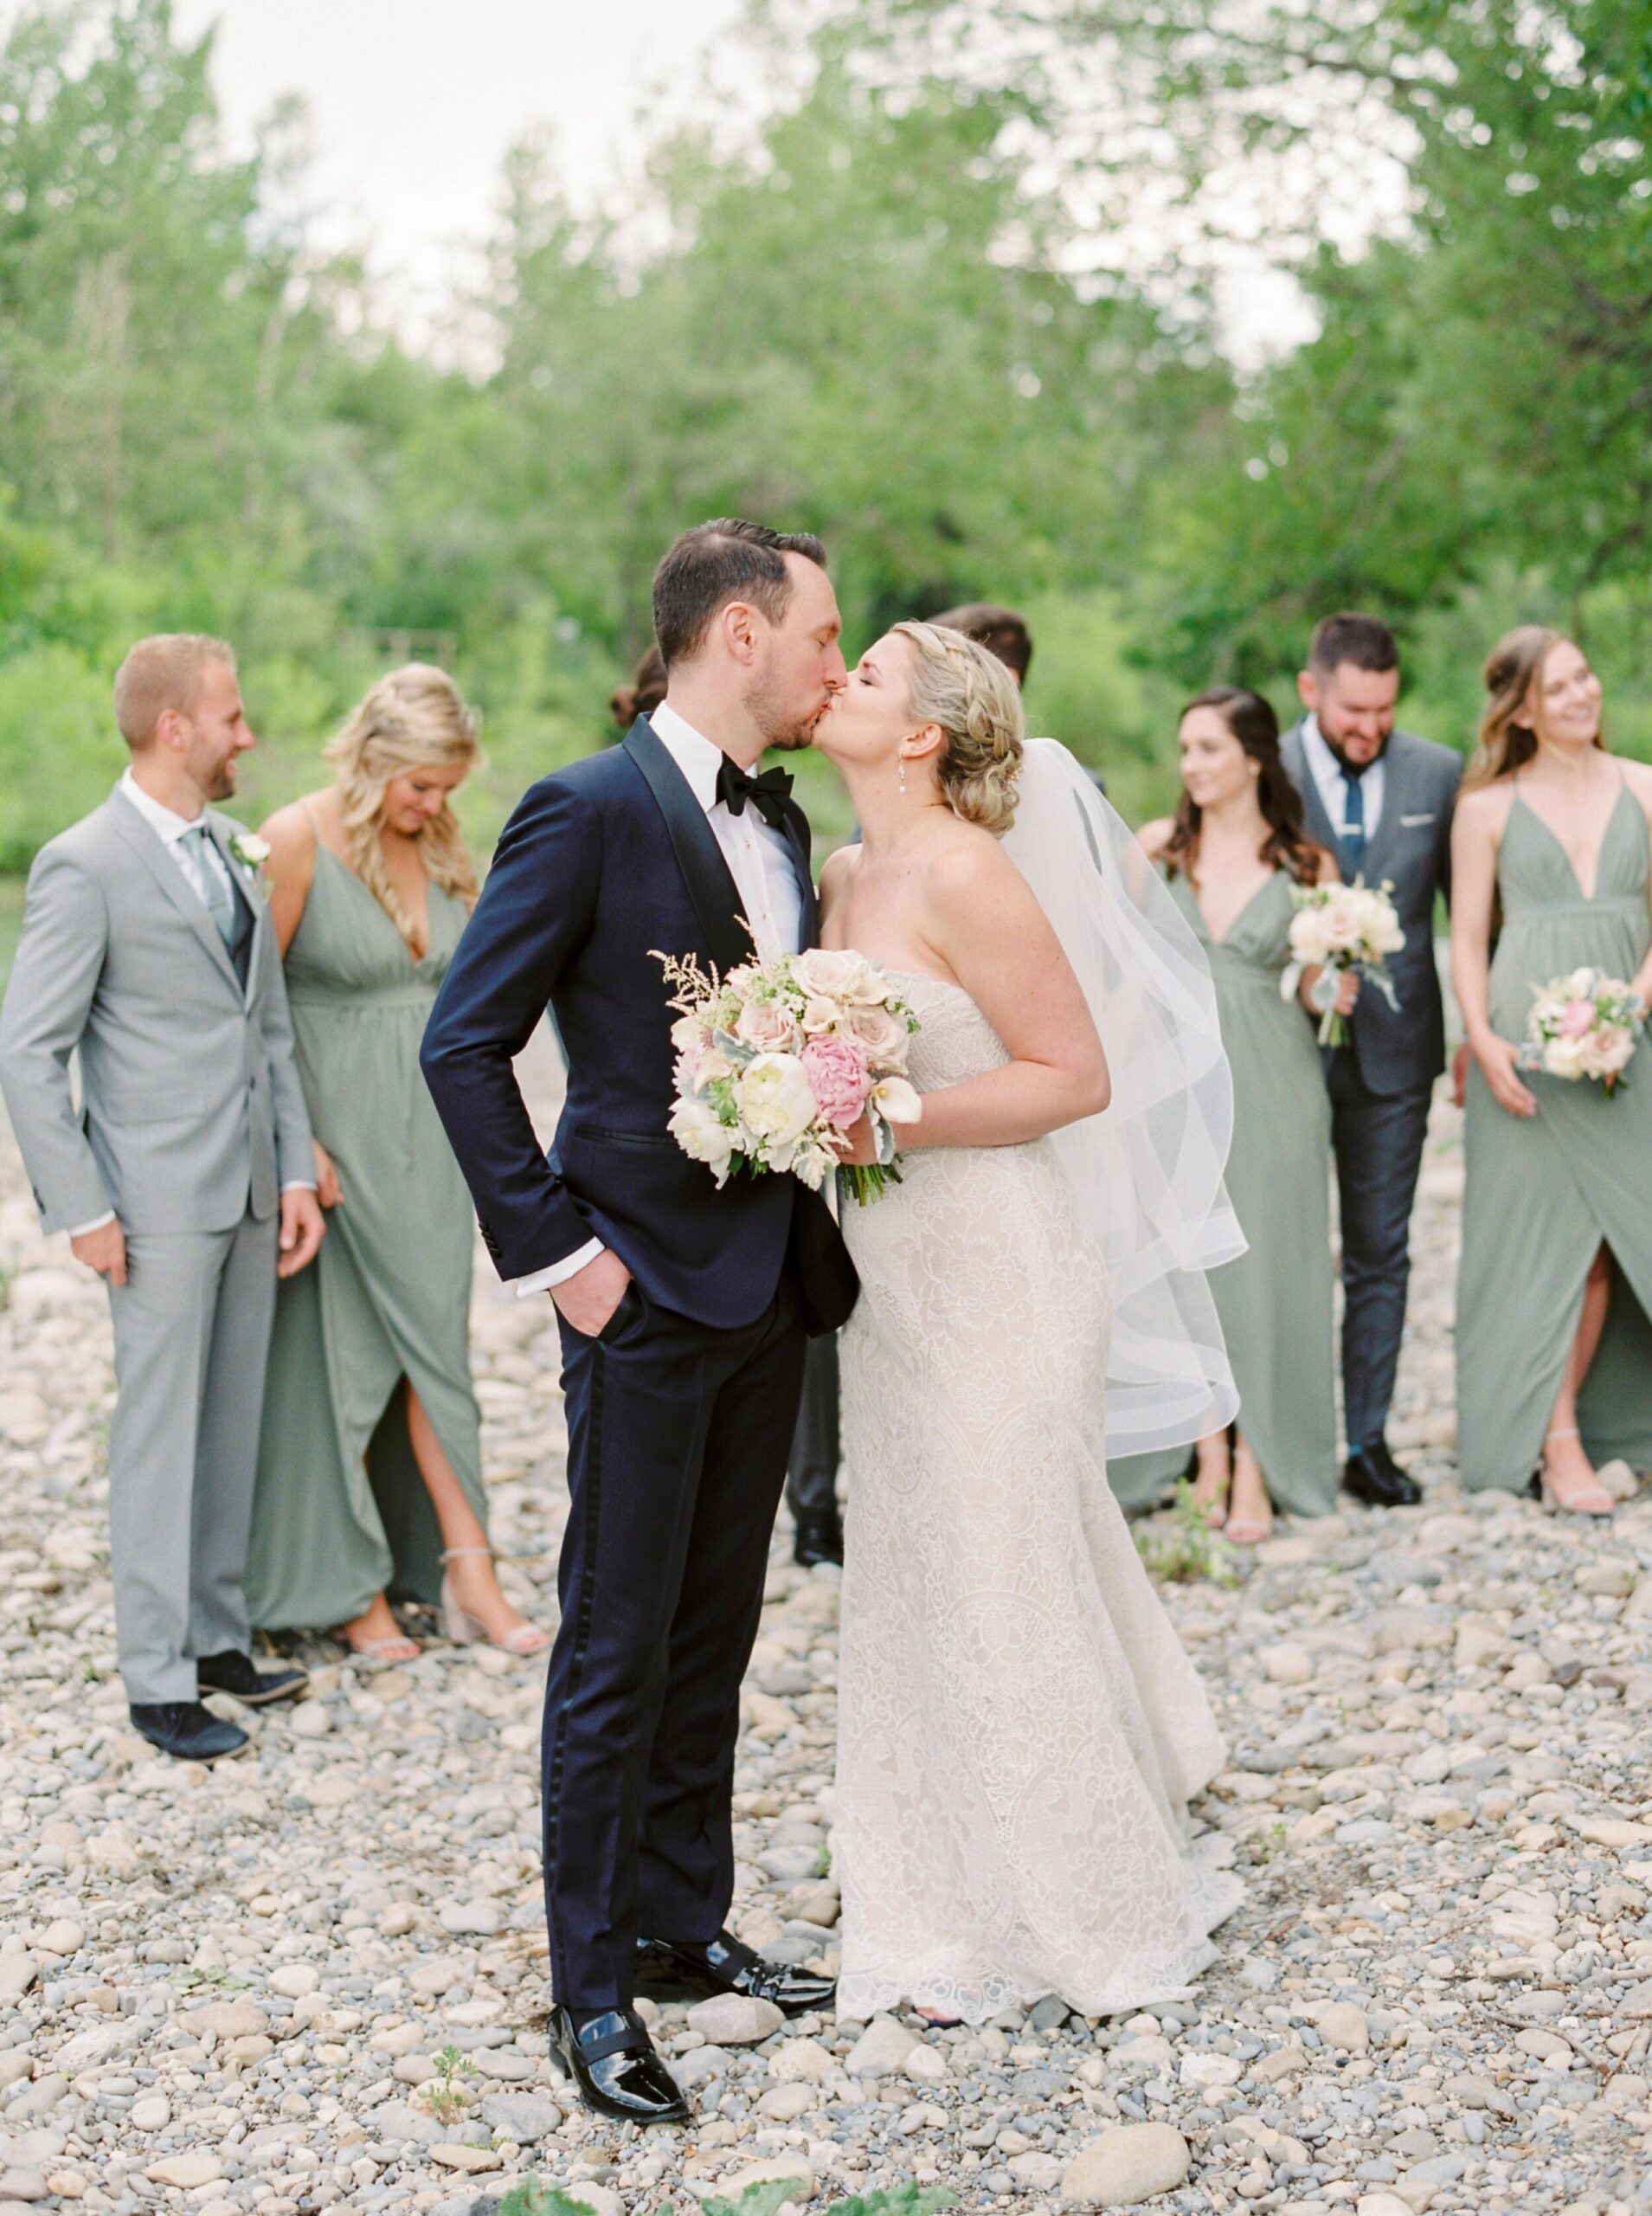  sage green and soft grey bridal party attire | Deane House Wedding | Calgary photographer | fine art film photography Justine Milton 